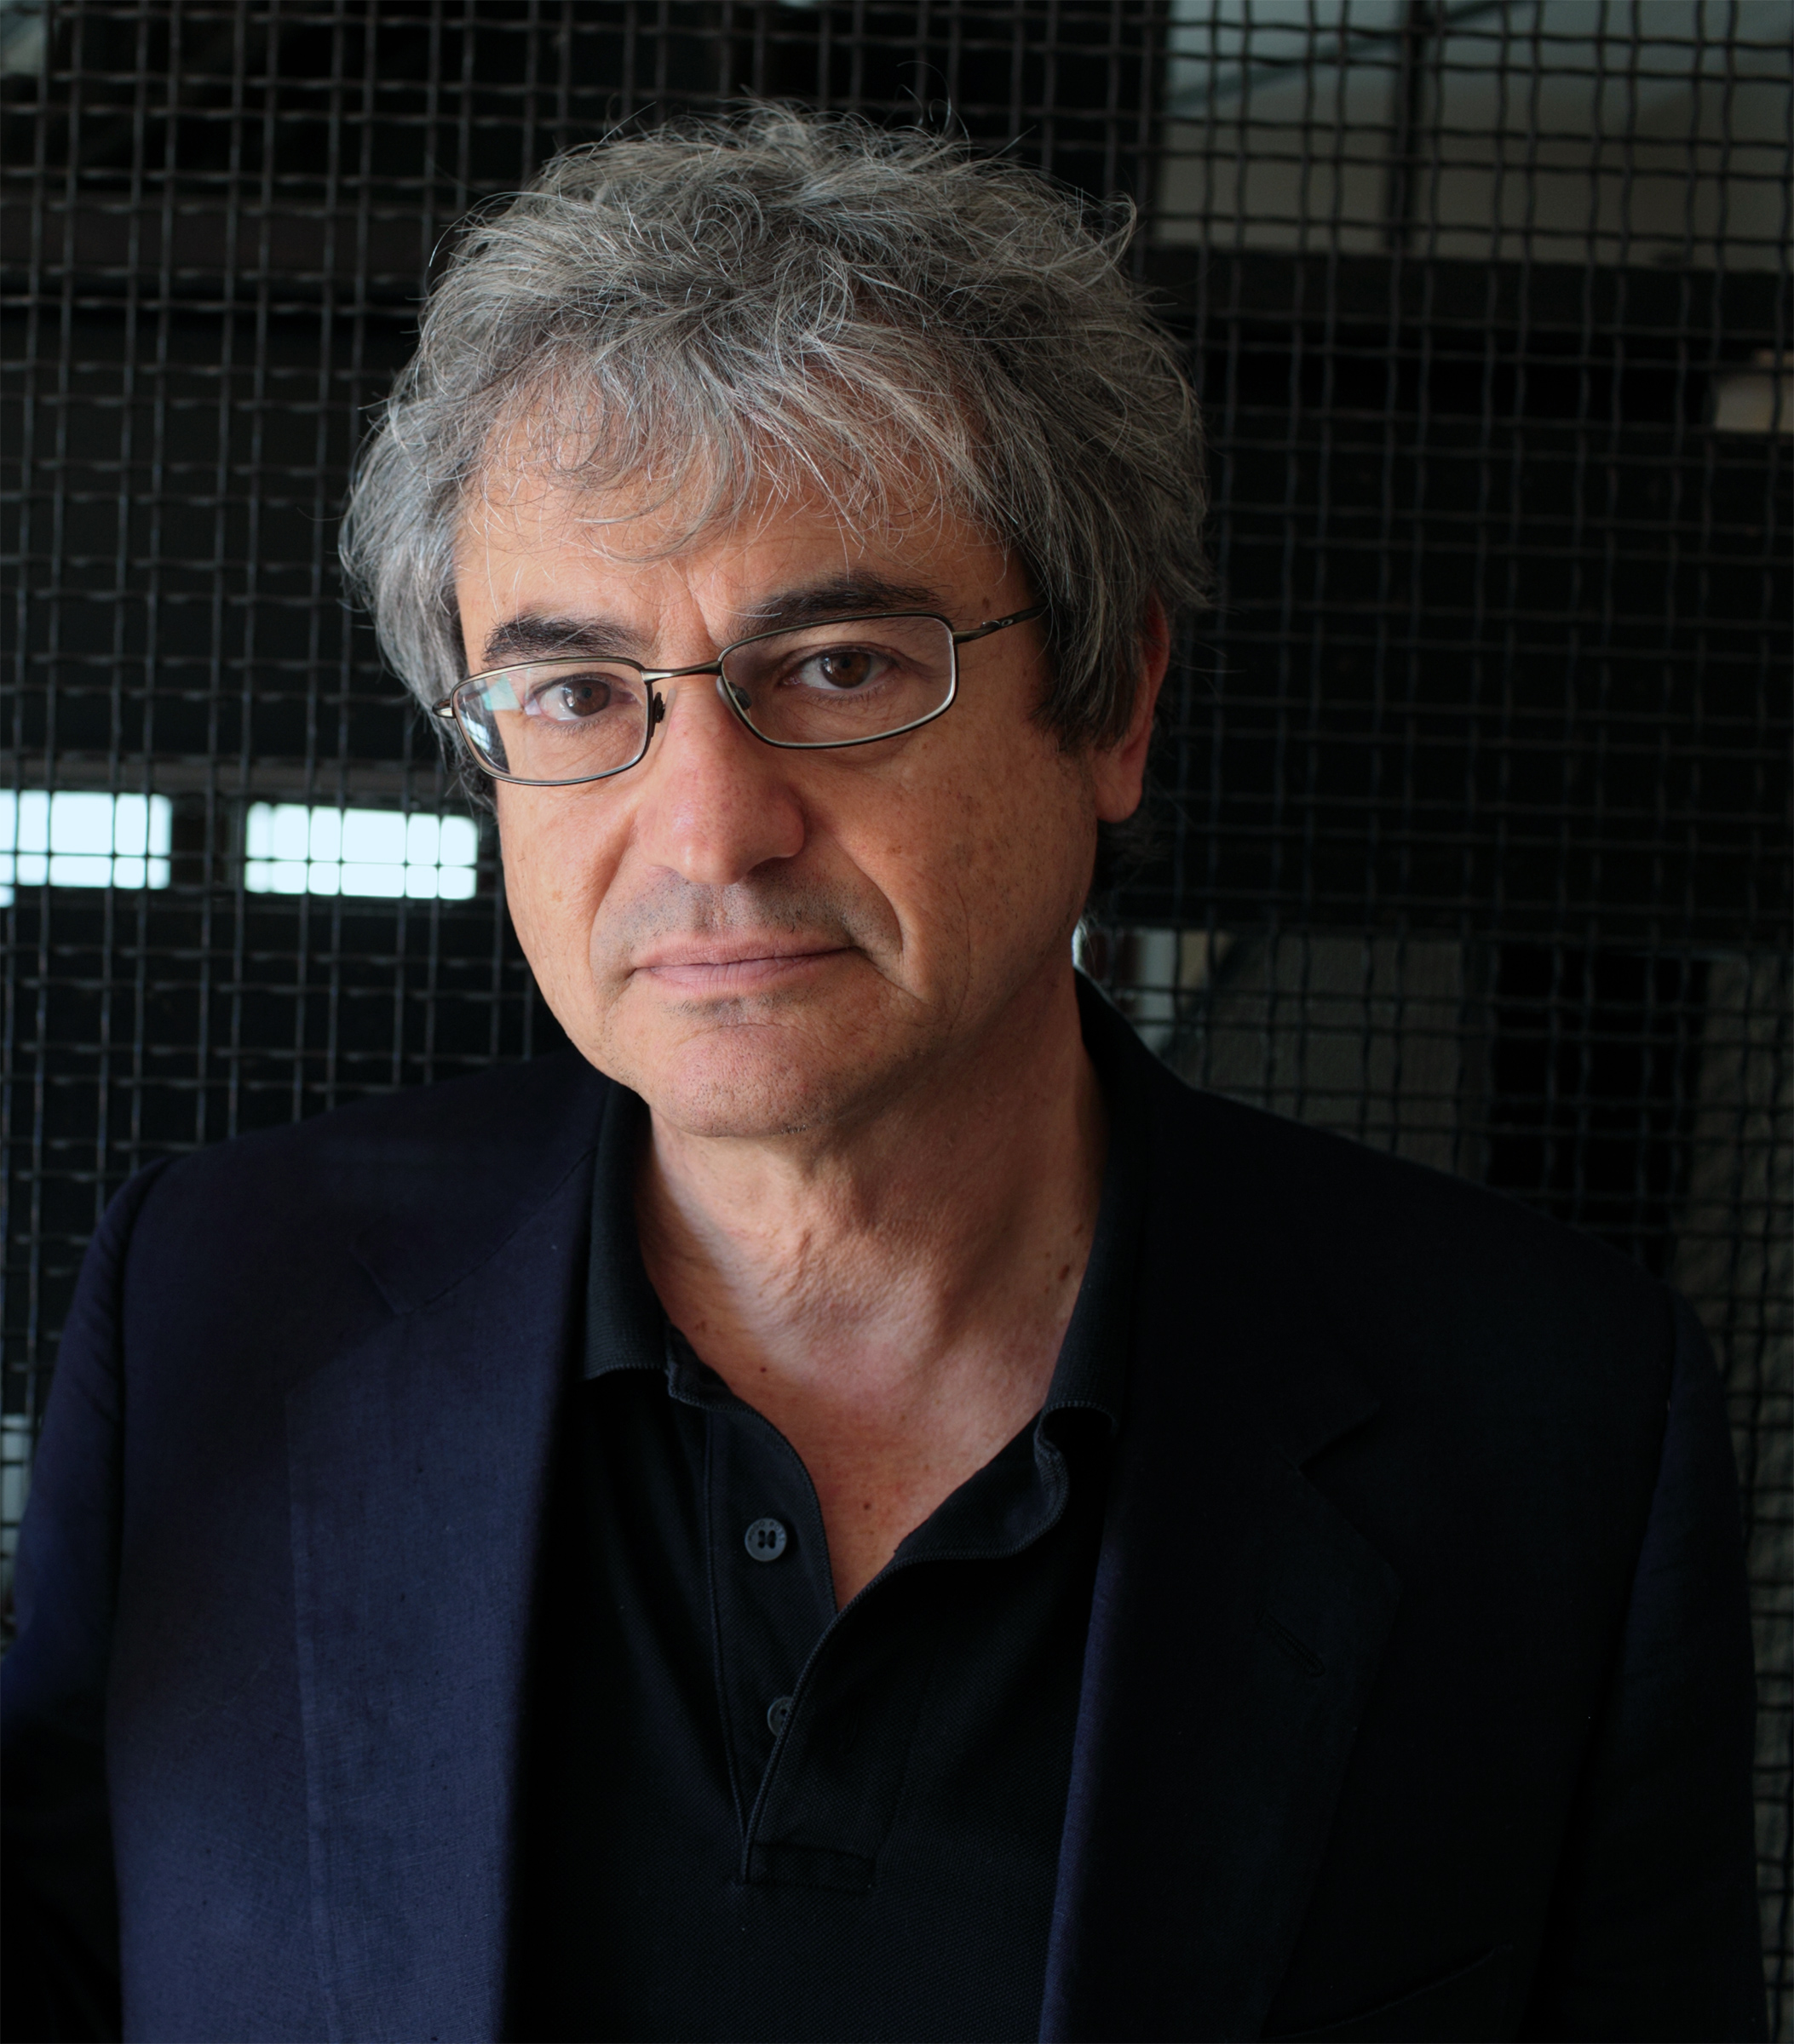 Author Carlo Rovelli